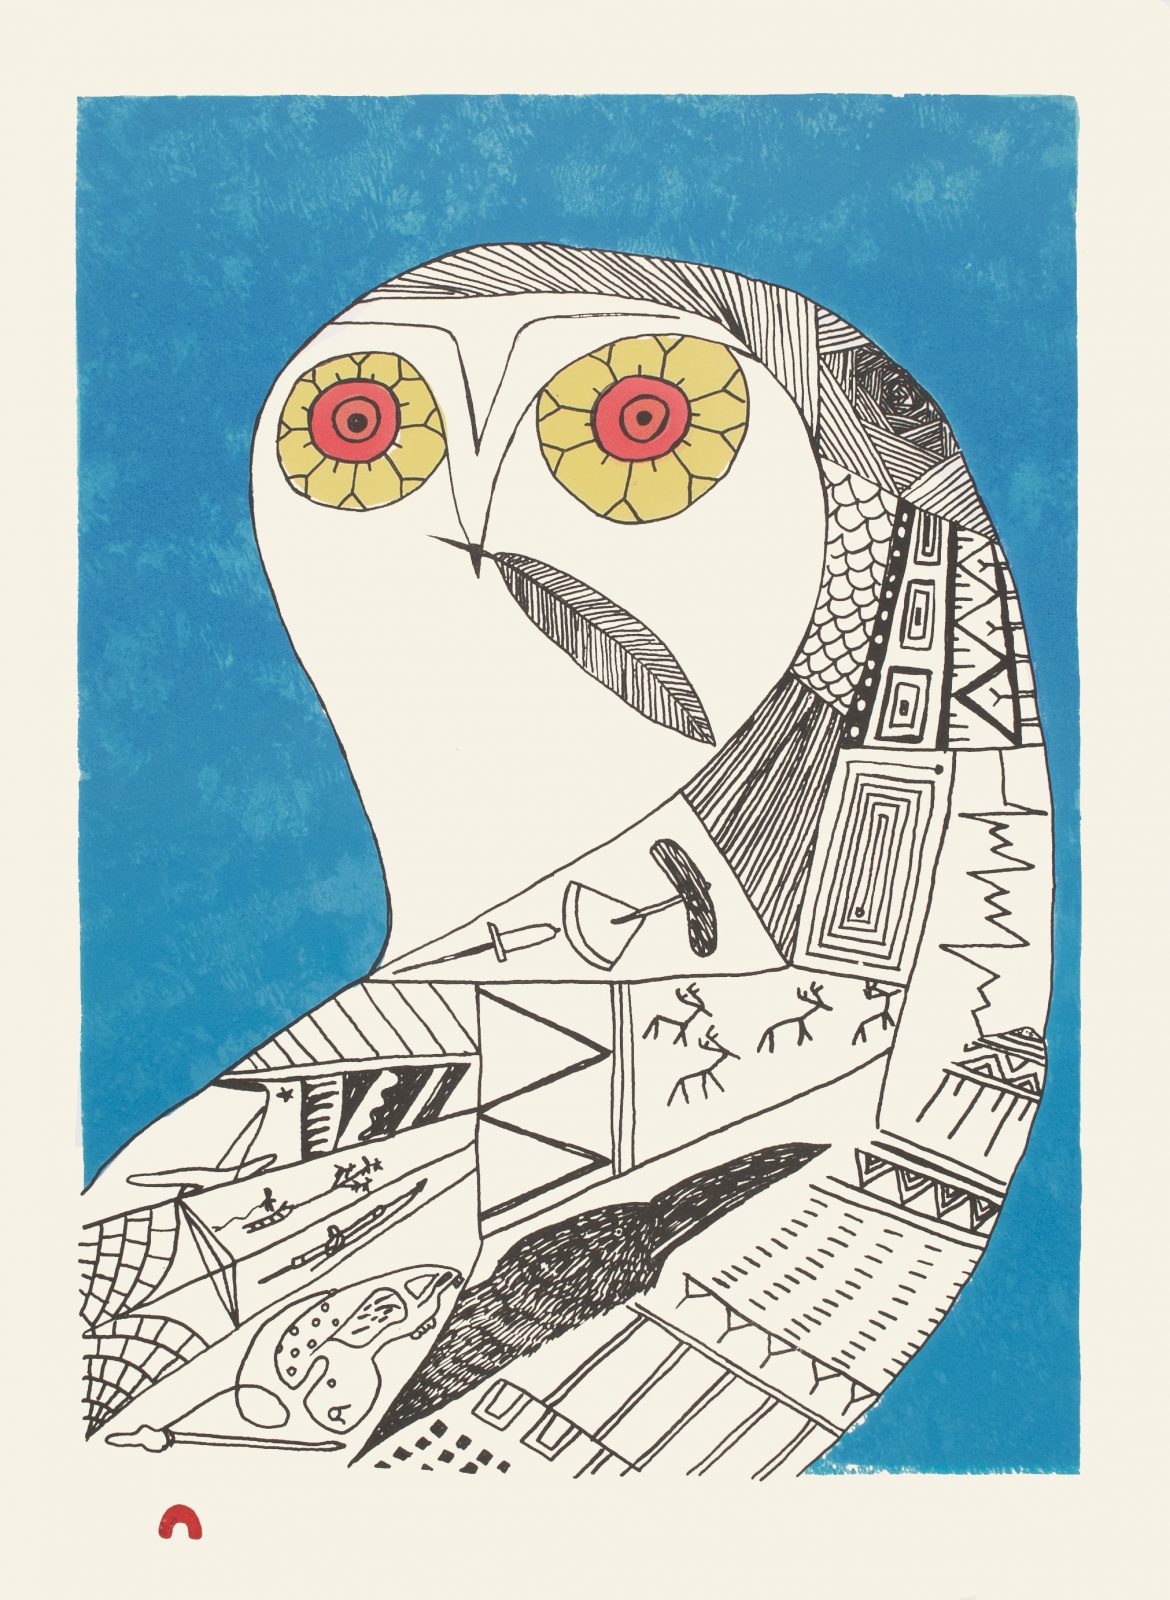 NINGIUKULU TEEVEE Eclectic Owl Cape Dorset Print 2021